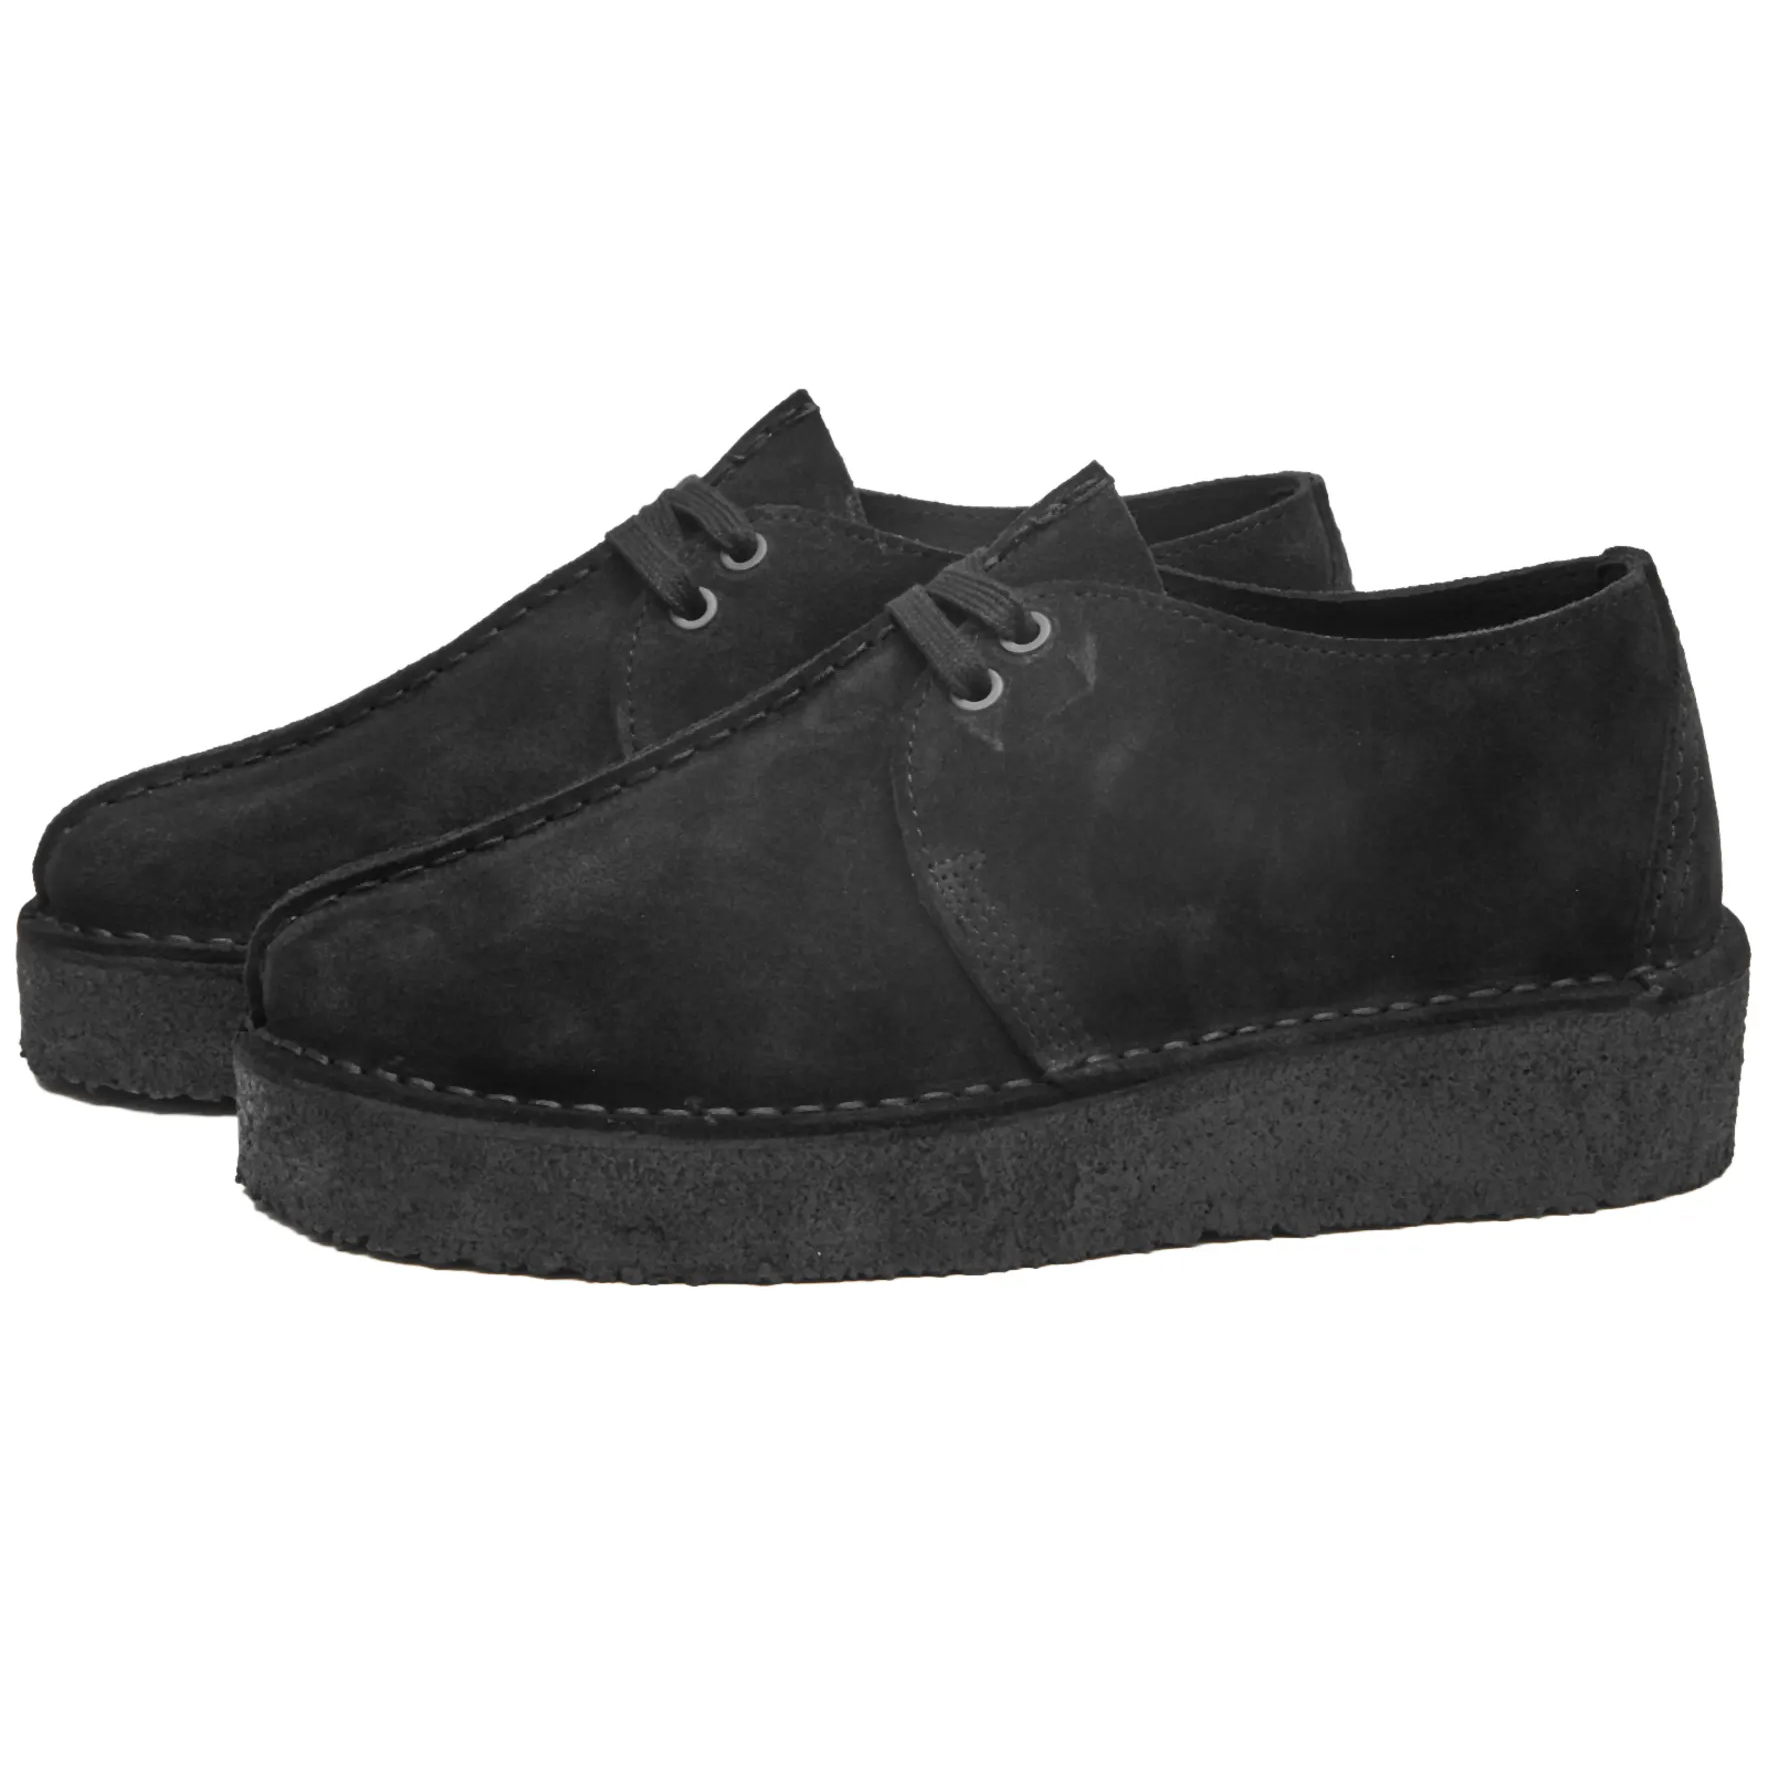 кроссовки clarks originals zapatillas white leather Ботинки Clarks Originals Trek Wedge, черный